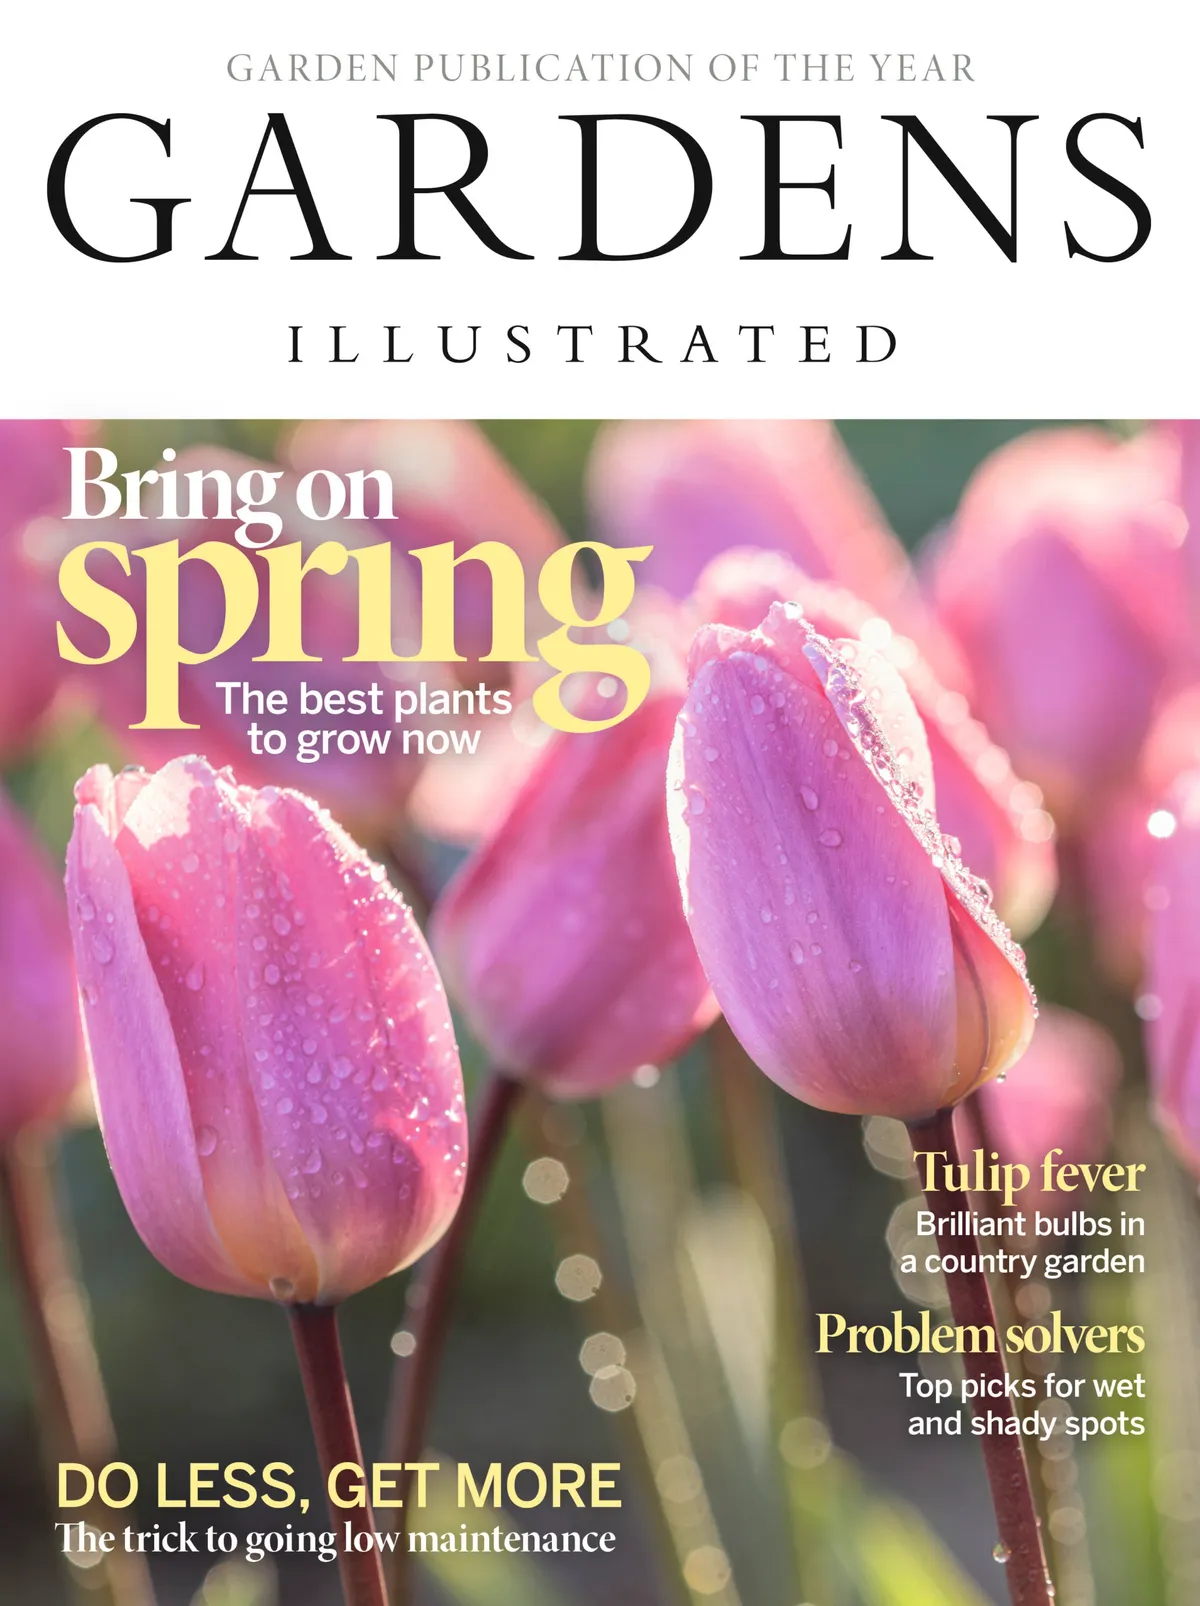 April's Gardens Illustrated magazine